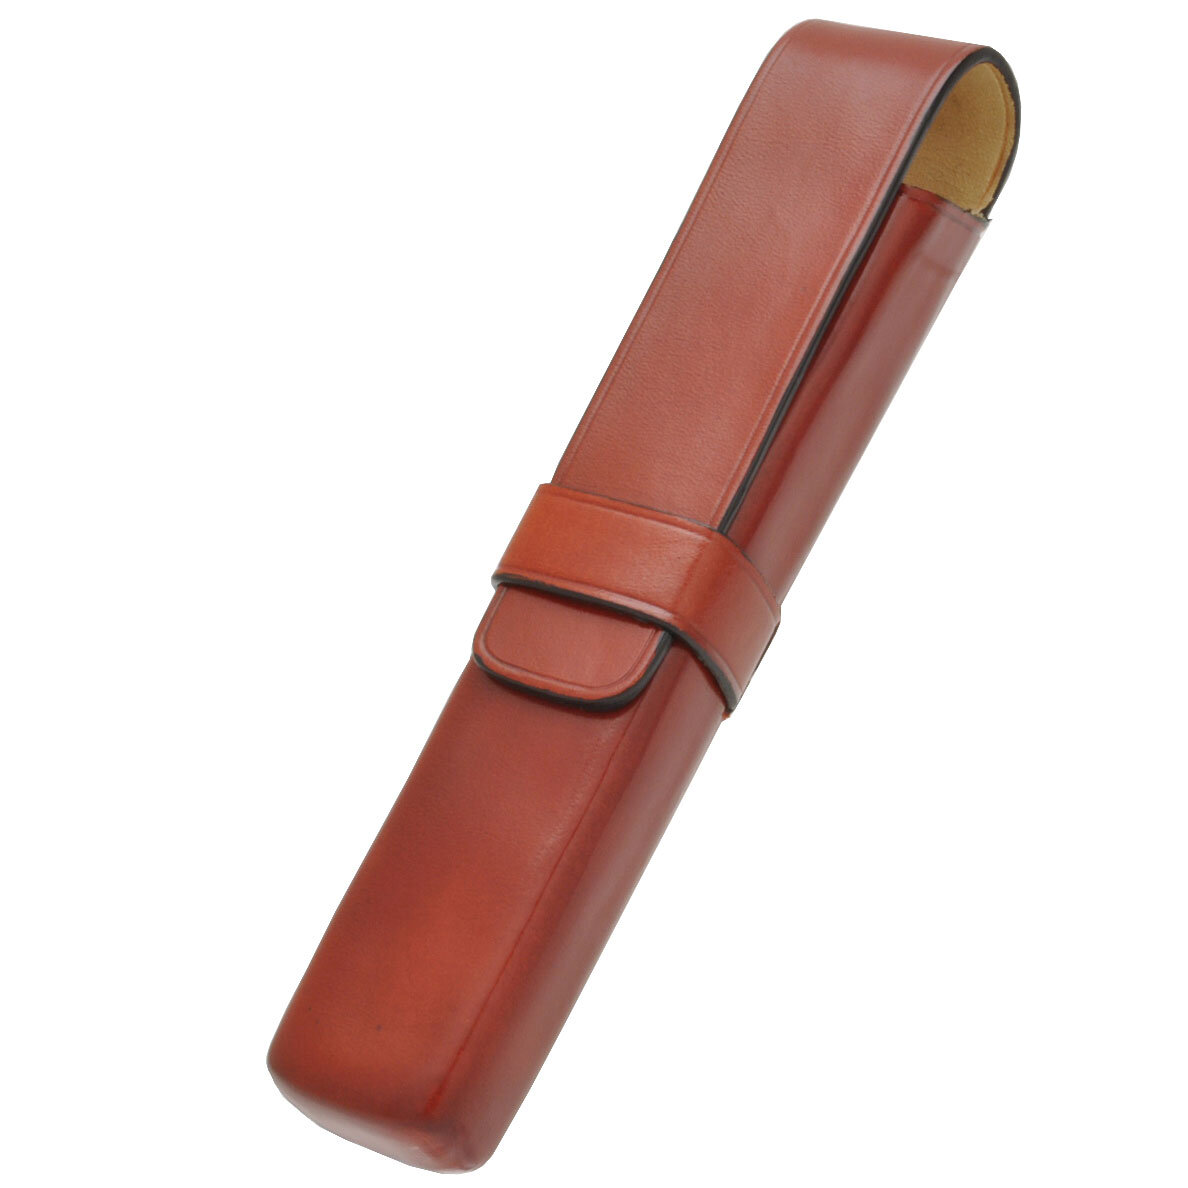 Vantaggio Black Napa Leather Single Pen Case Original Retail $45! 